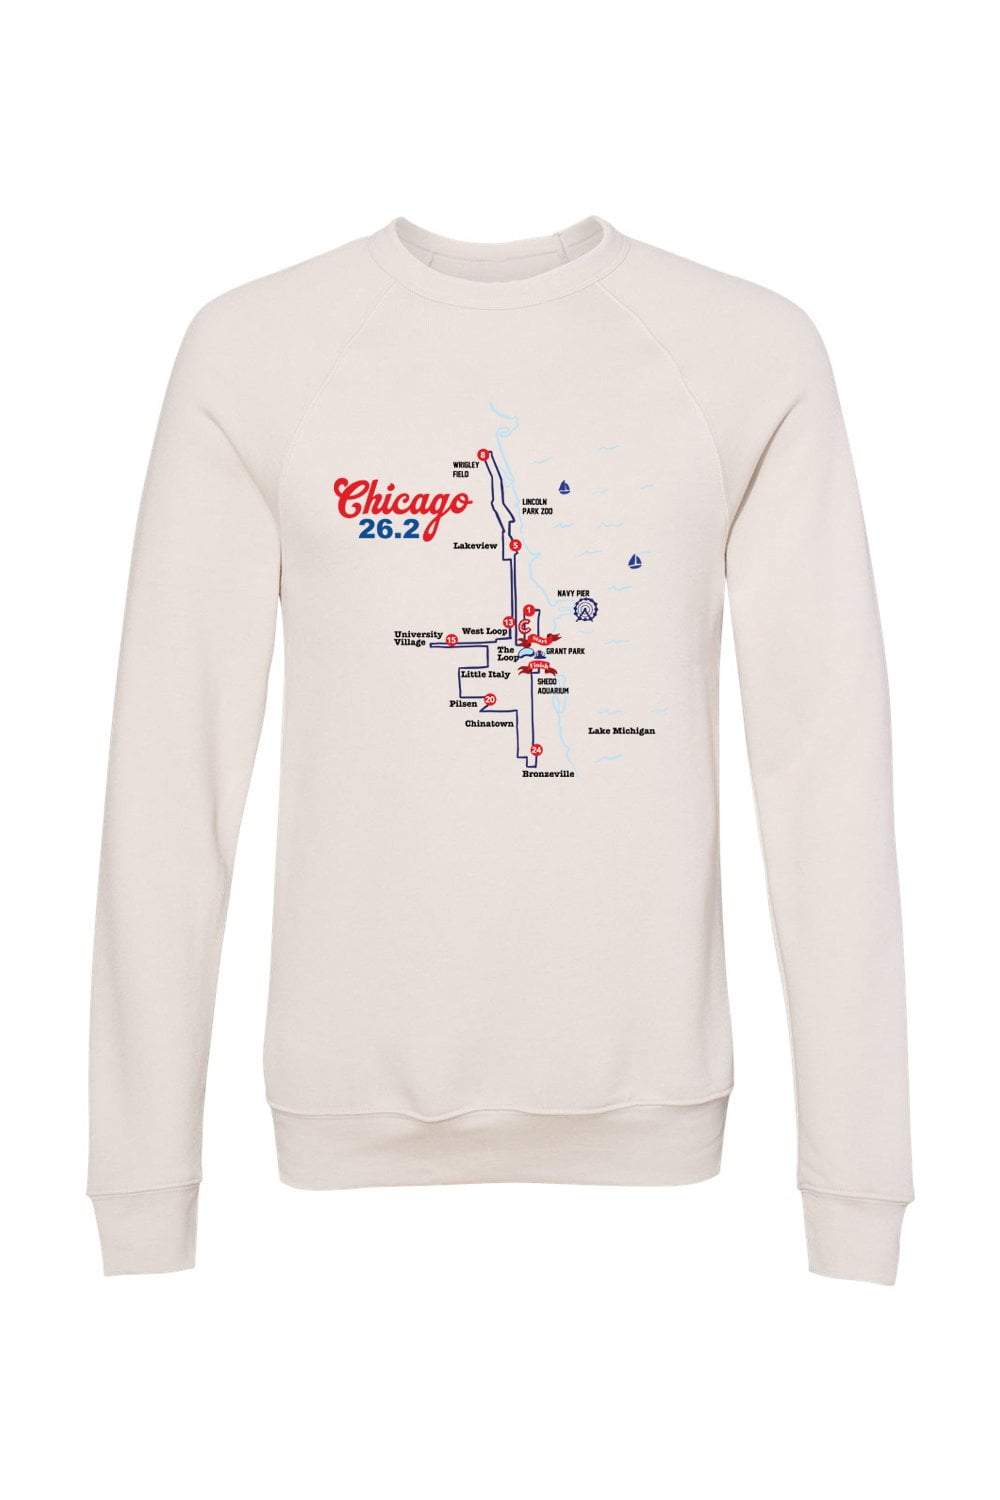 Sarah Marie Design Studio Sweatshirt Chicago Marathon Map Sweatshirt